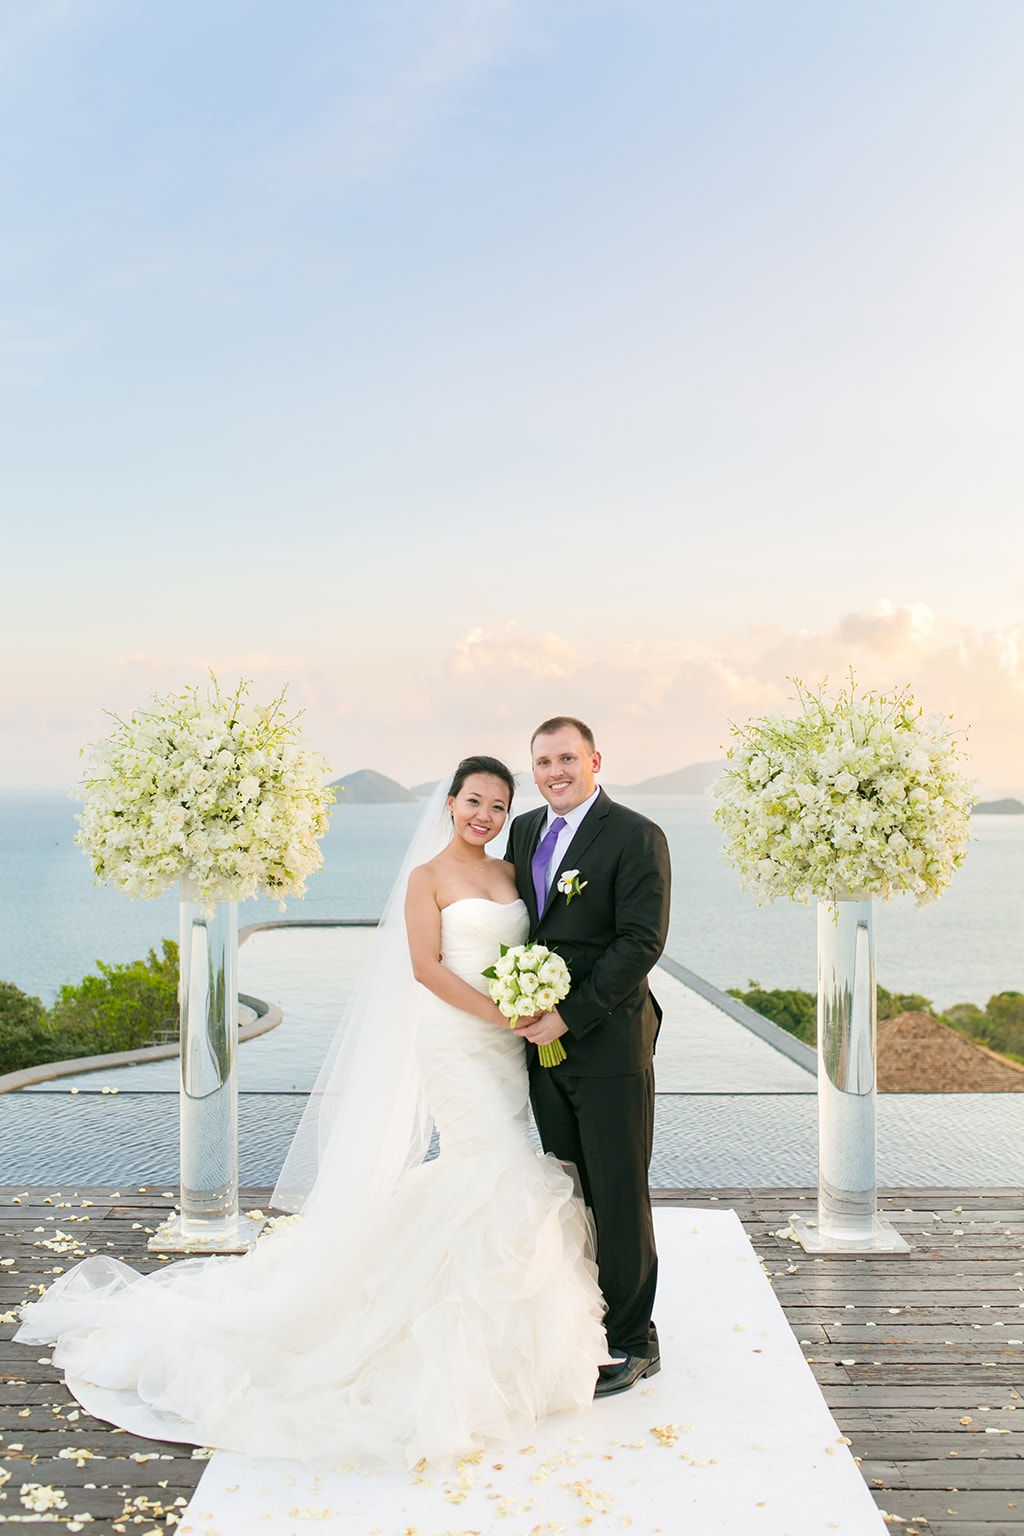 Singapore Couple's Destination Wedding At Sri Panwa Resort, Phuket  by James  on OneThreeOneFour 14